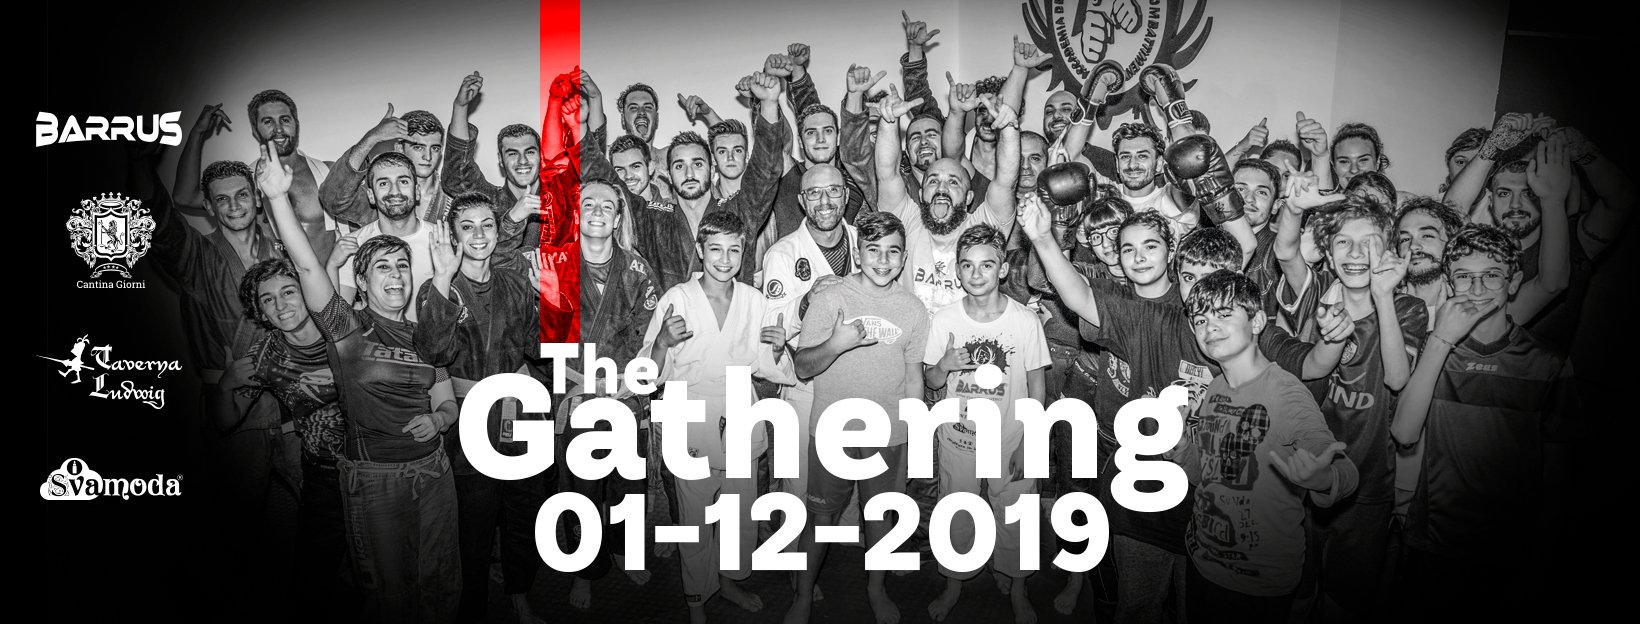 The Gathering 2019 - Kickboxing, MMA, Brazilian Jiu Jitsu